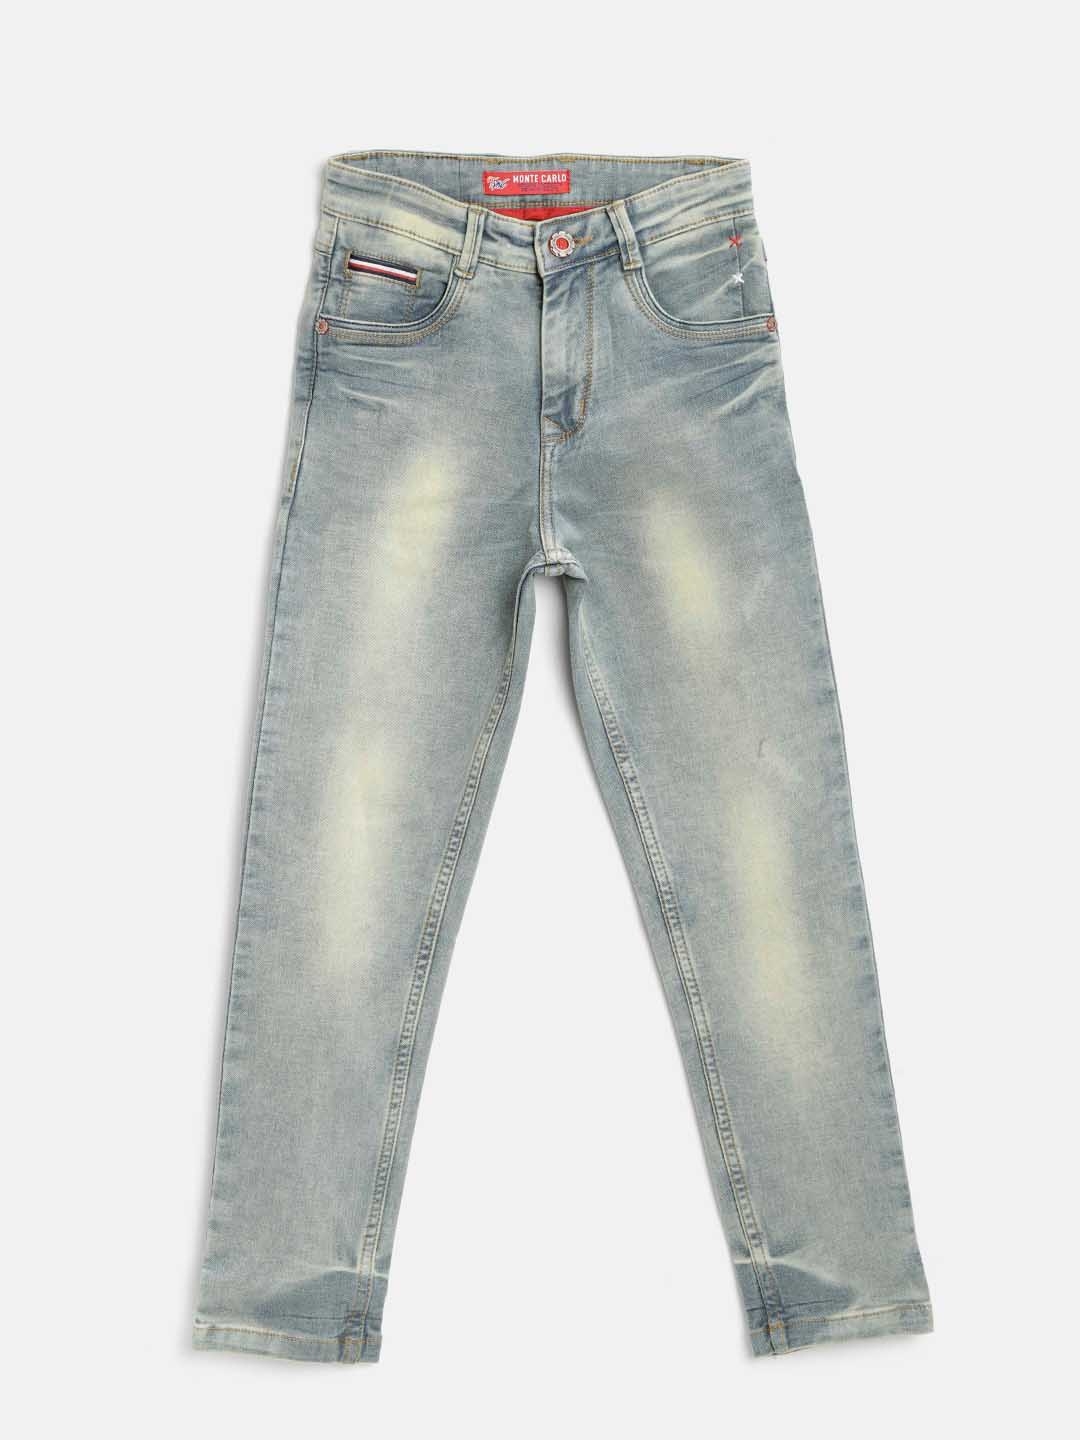 monte carlo jeans myntra